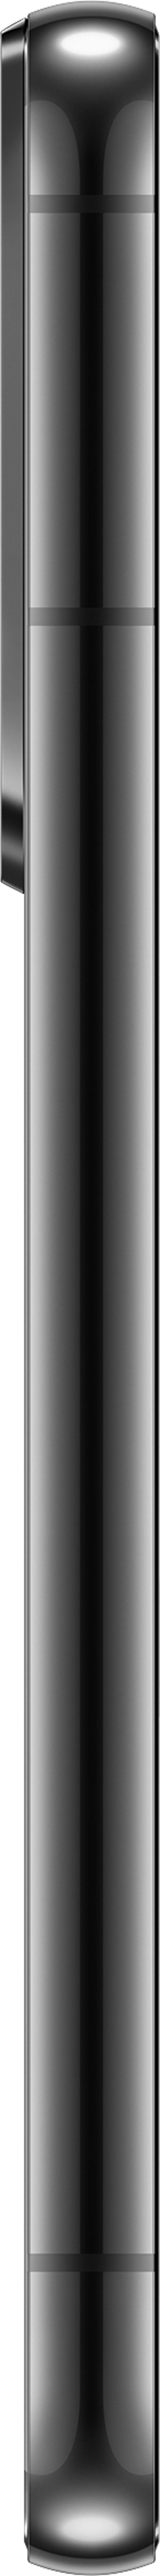 Samsung Galaxy S22 256GB Dual-SIM Fantomsvart